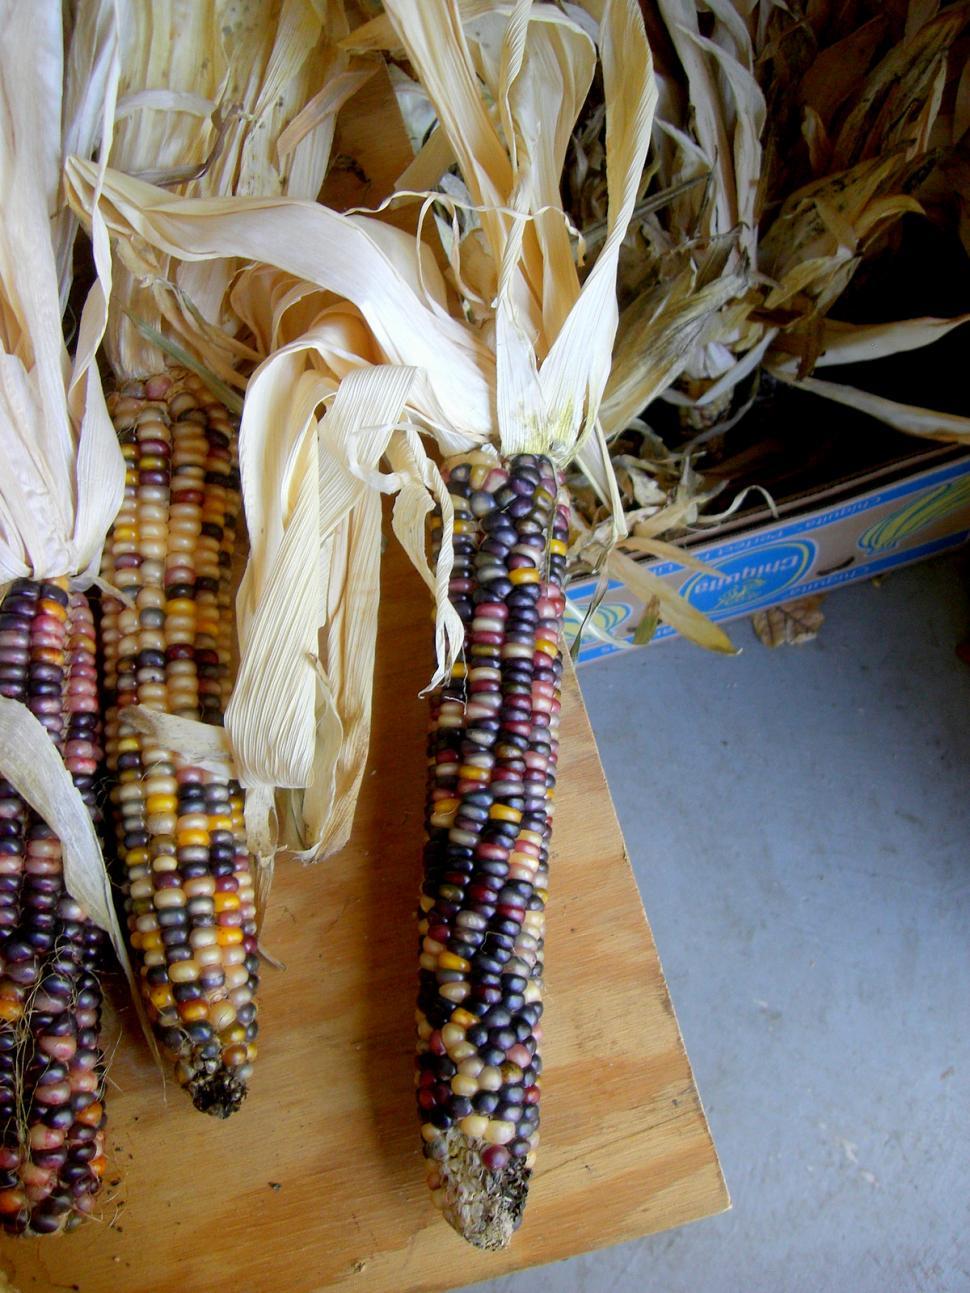 Free Image of Fall - Harvest Corn 